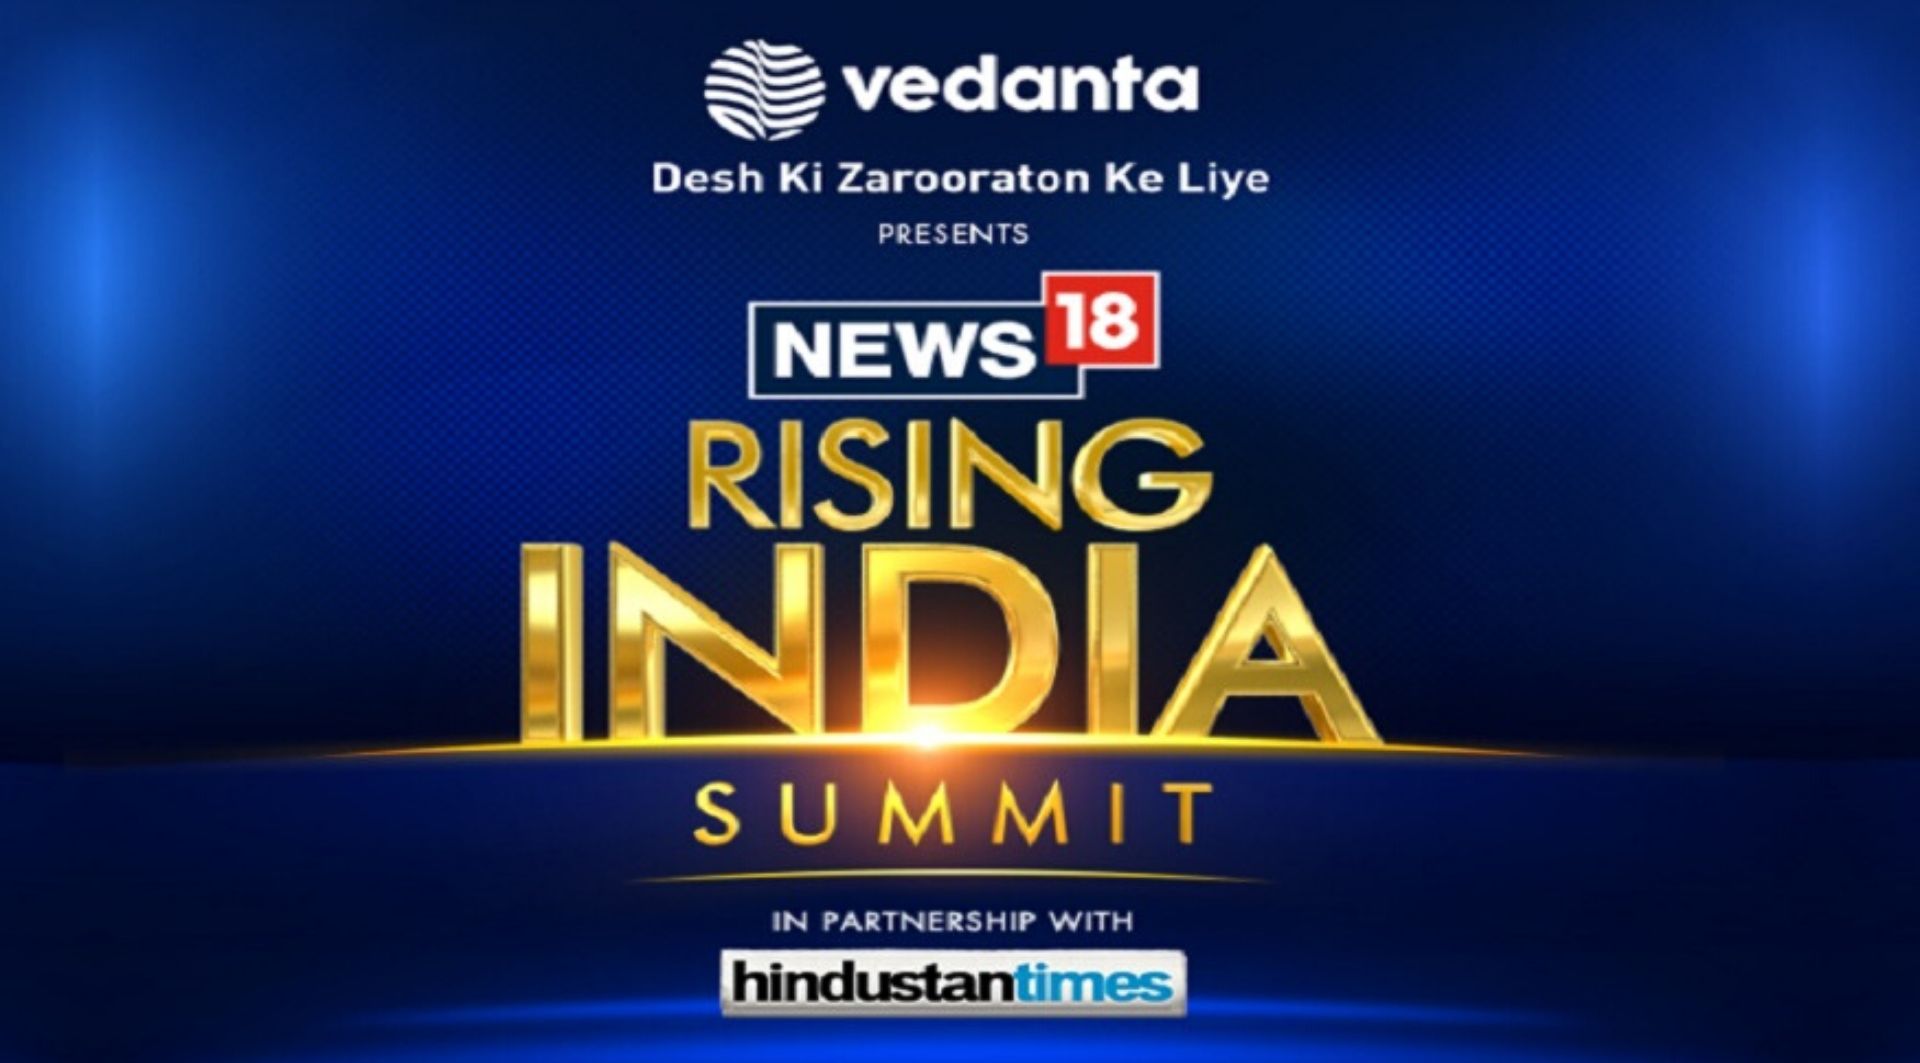 Rising india summit-ਰਾਈਜ਼ਿੰਗ ਇੰਡੀਆ ਸਮਿਟ 2020 ਦੀਆਂ ਝਲਕੀਆਂ